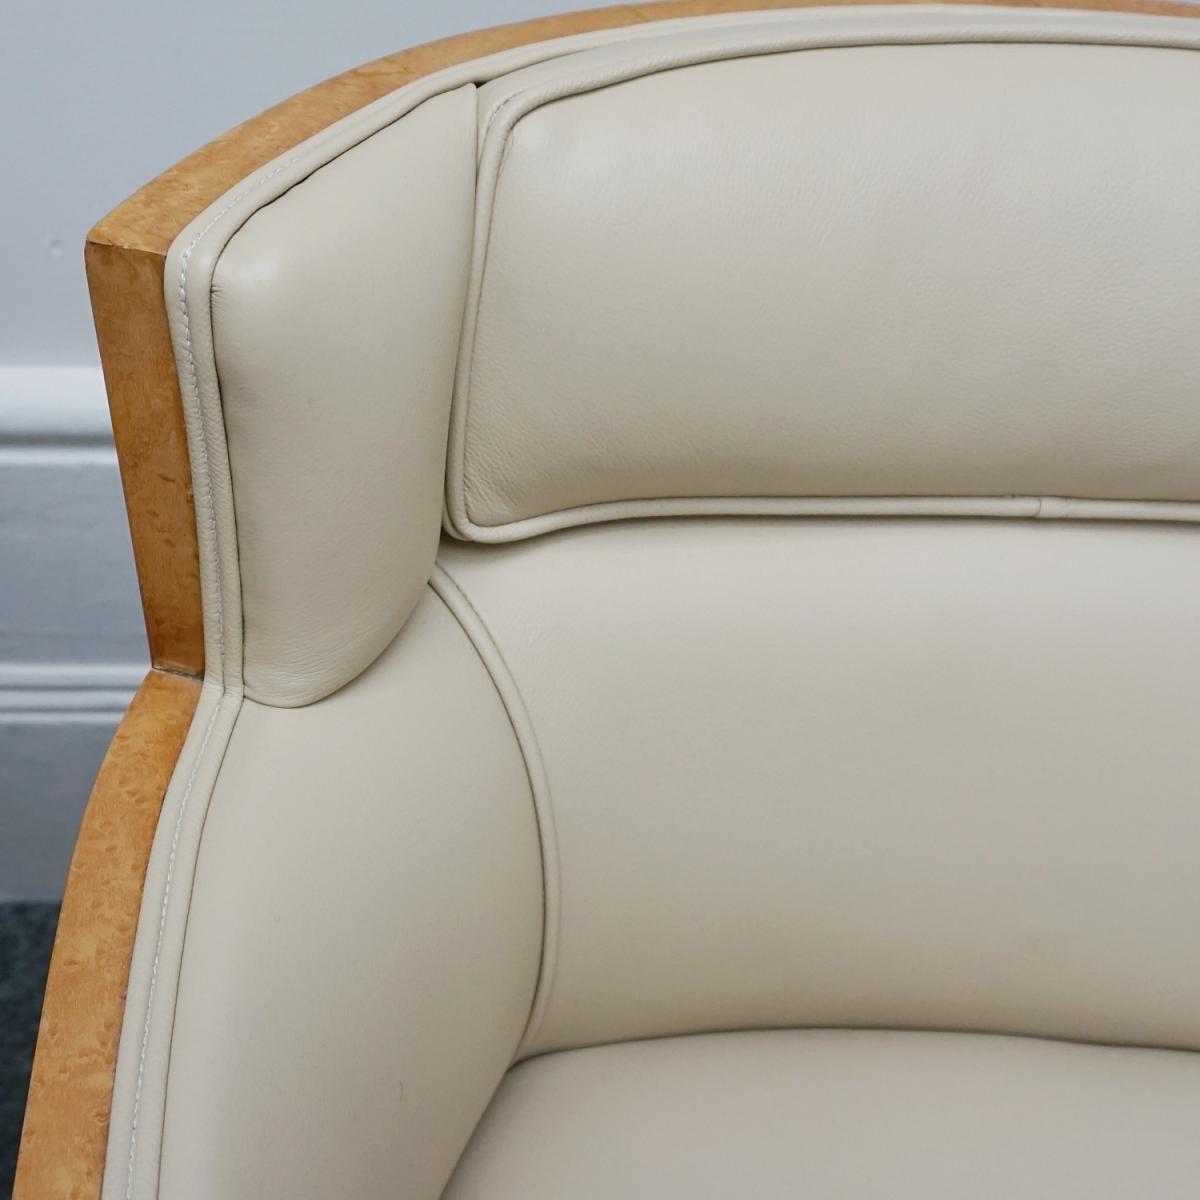 An Art Deco Pair of Bankers chairs. Jeroen Markies Art Deco.